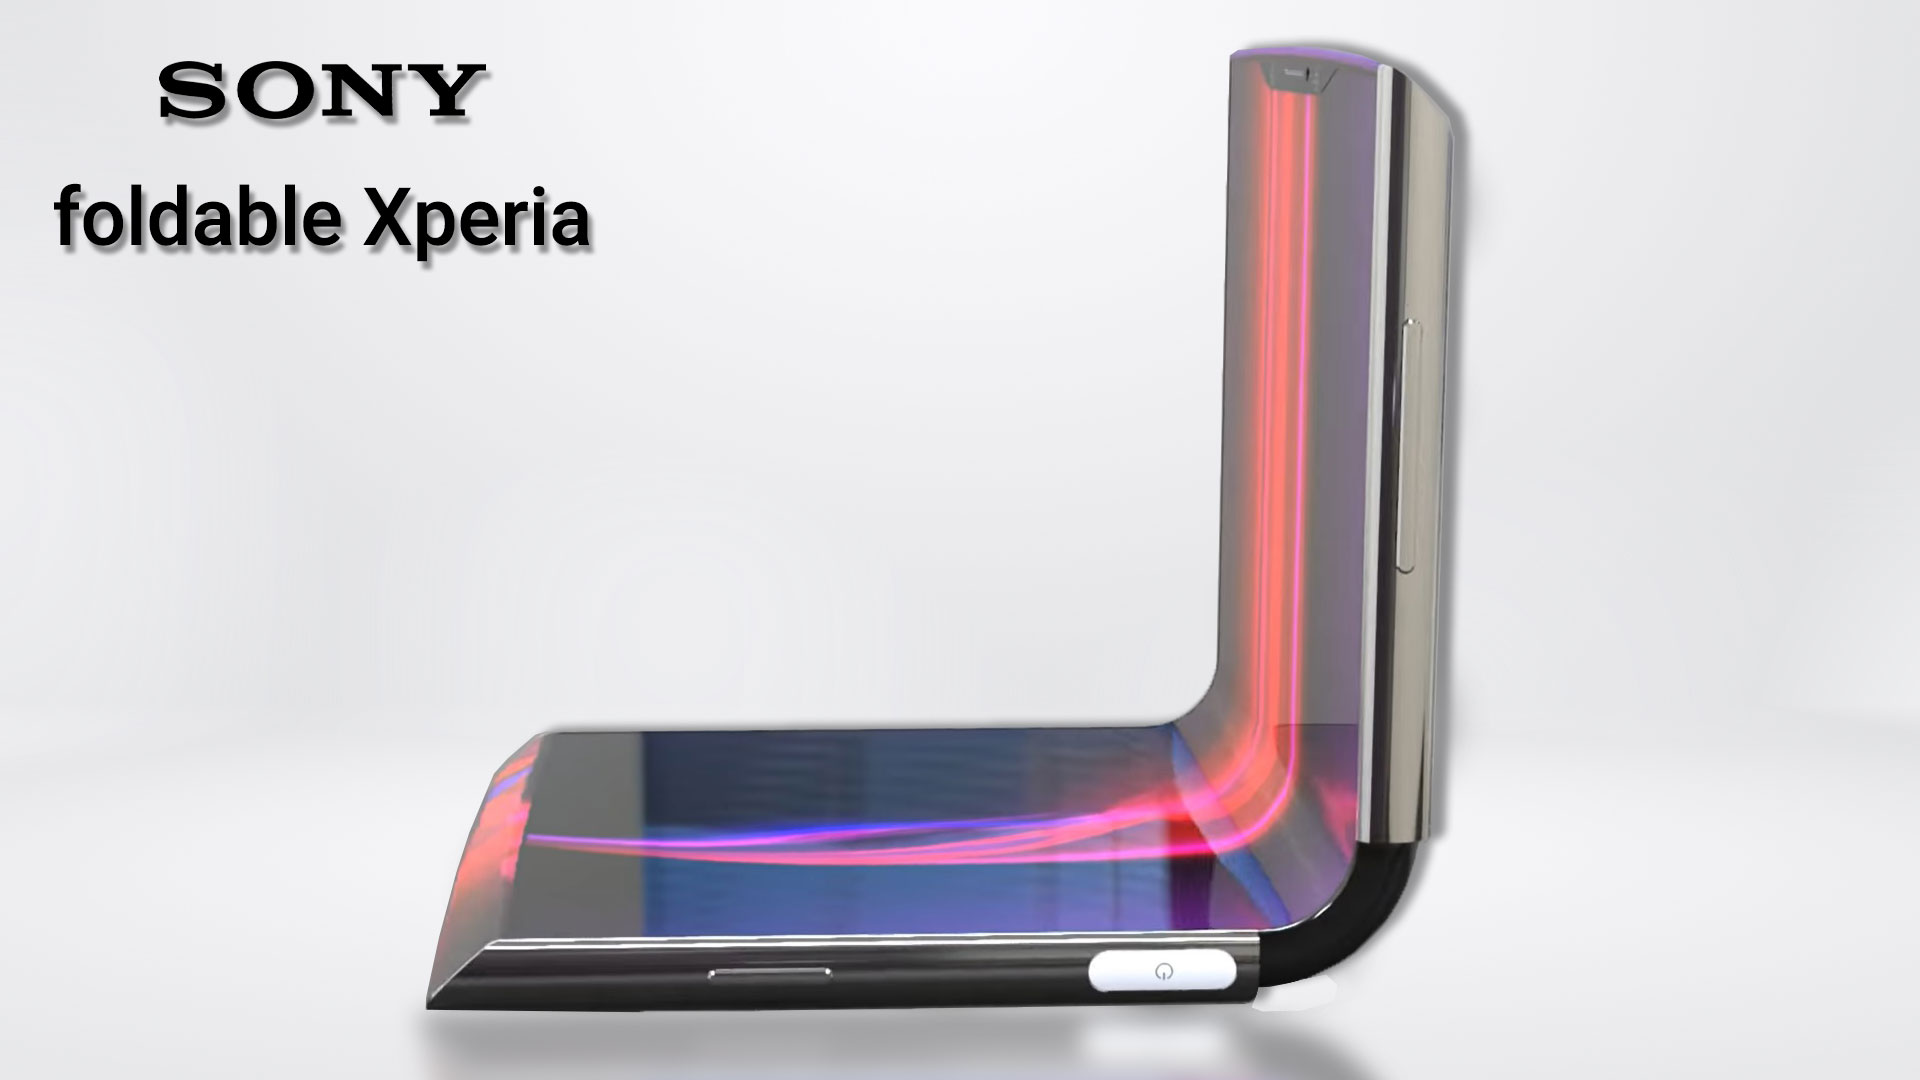 sony-xperia-foldable-phone